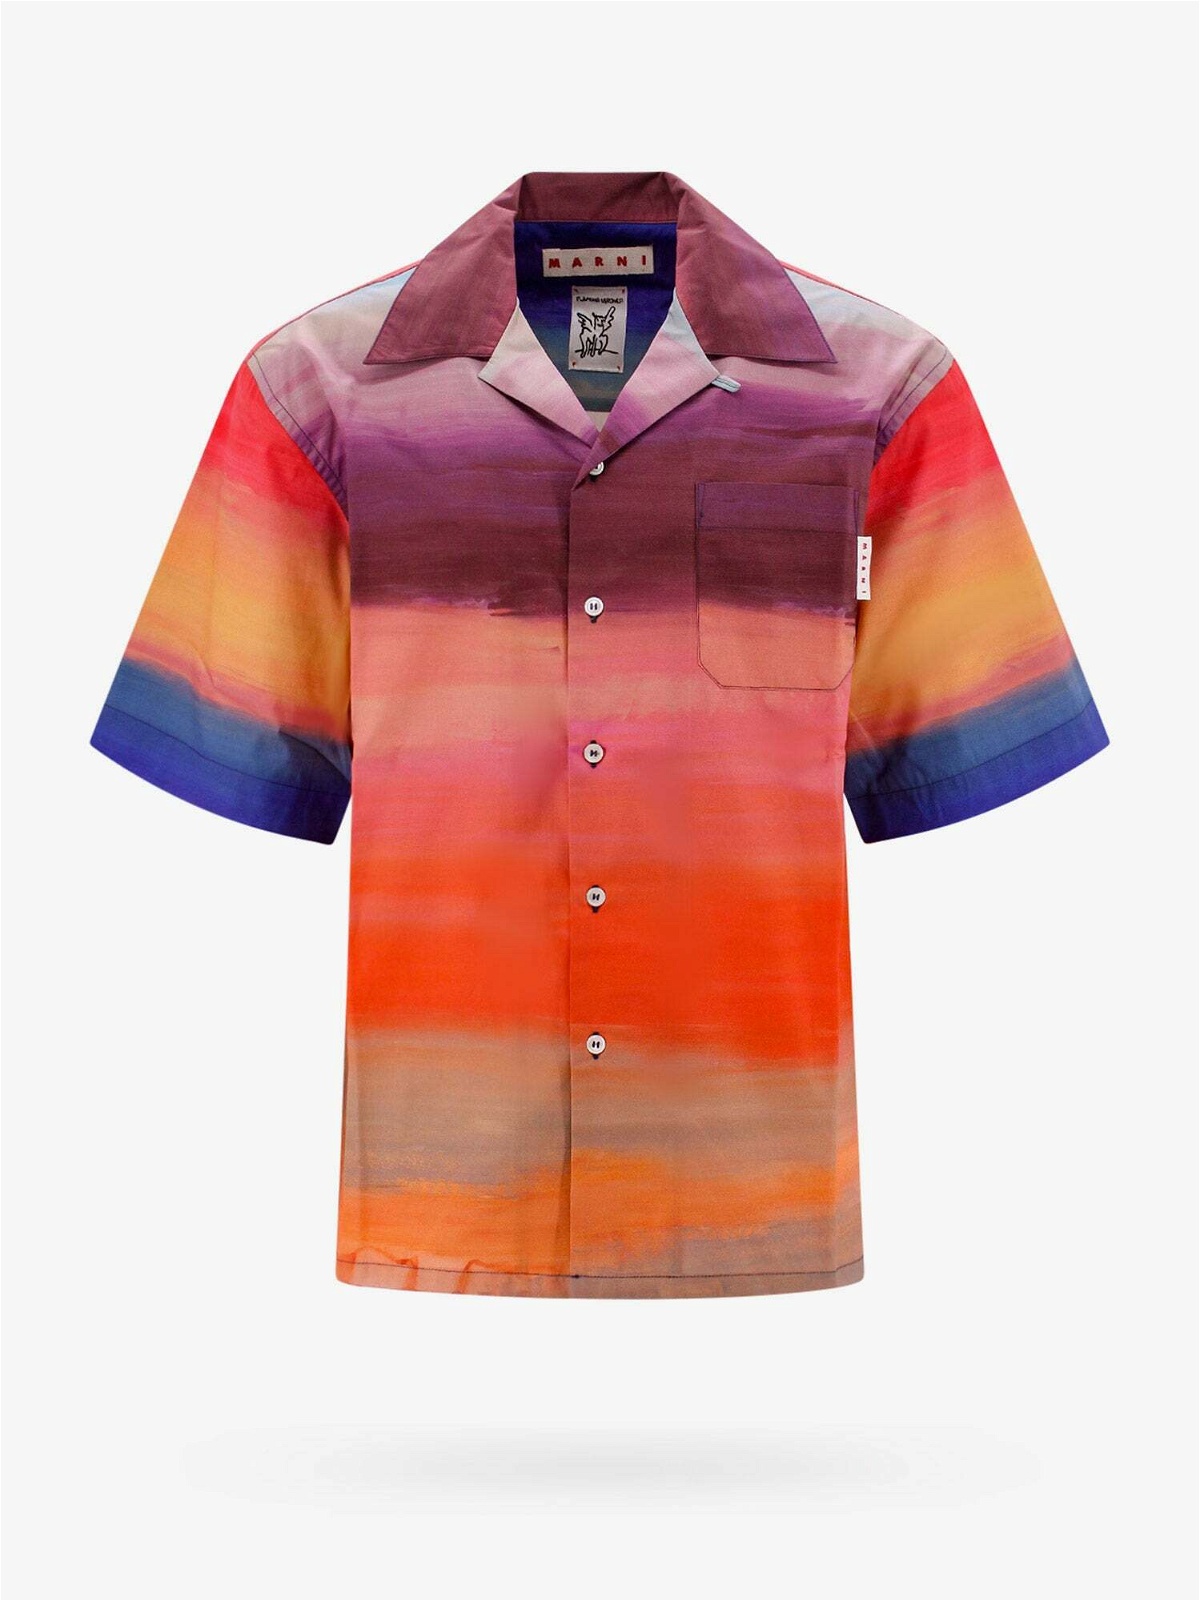 Marni Shirt Multicolor Mens Marni